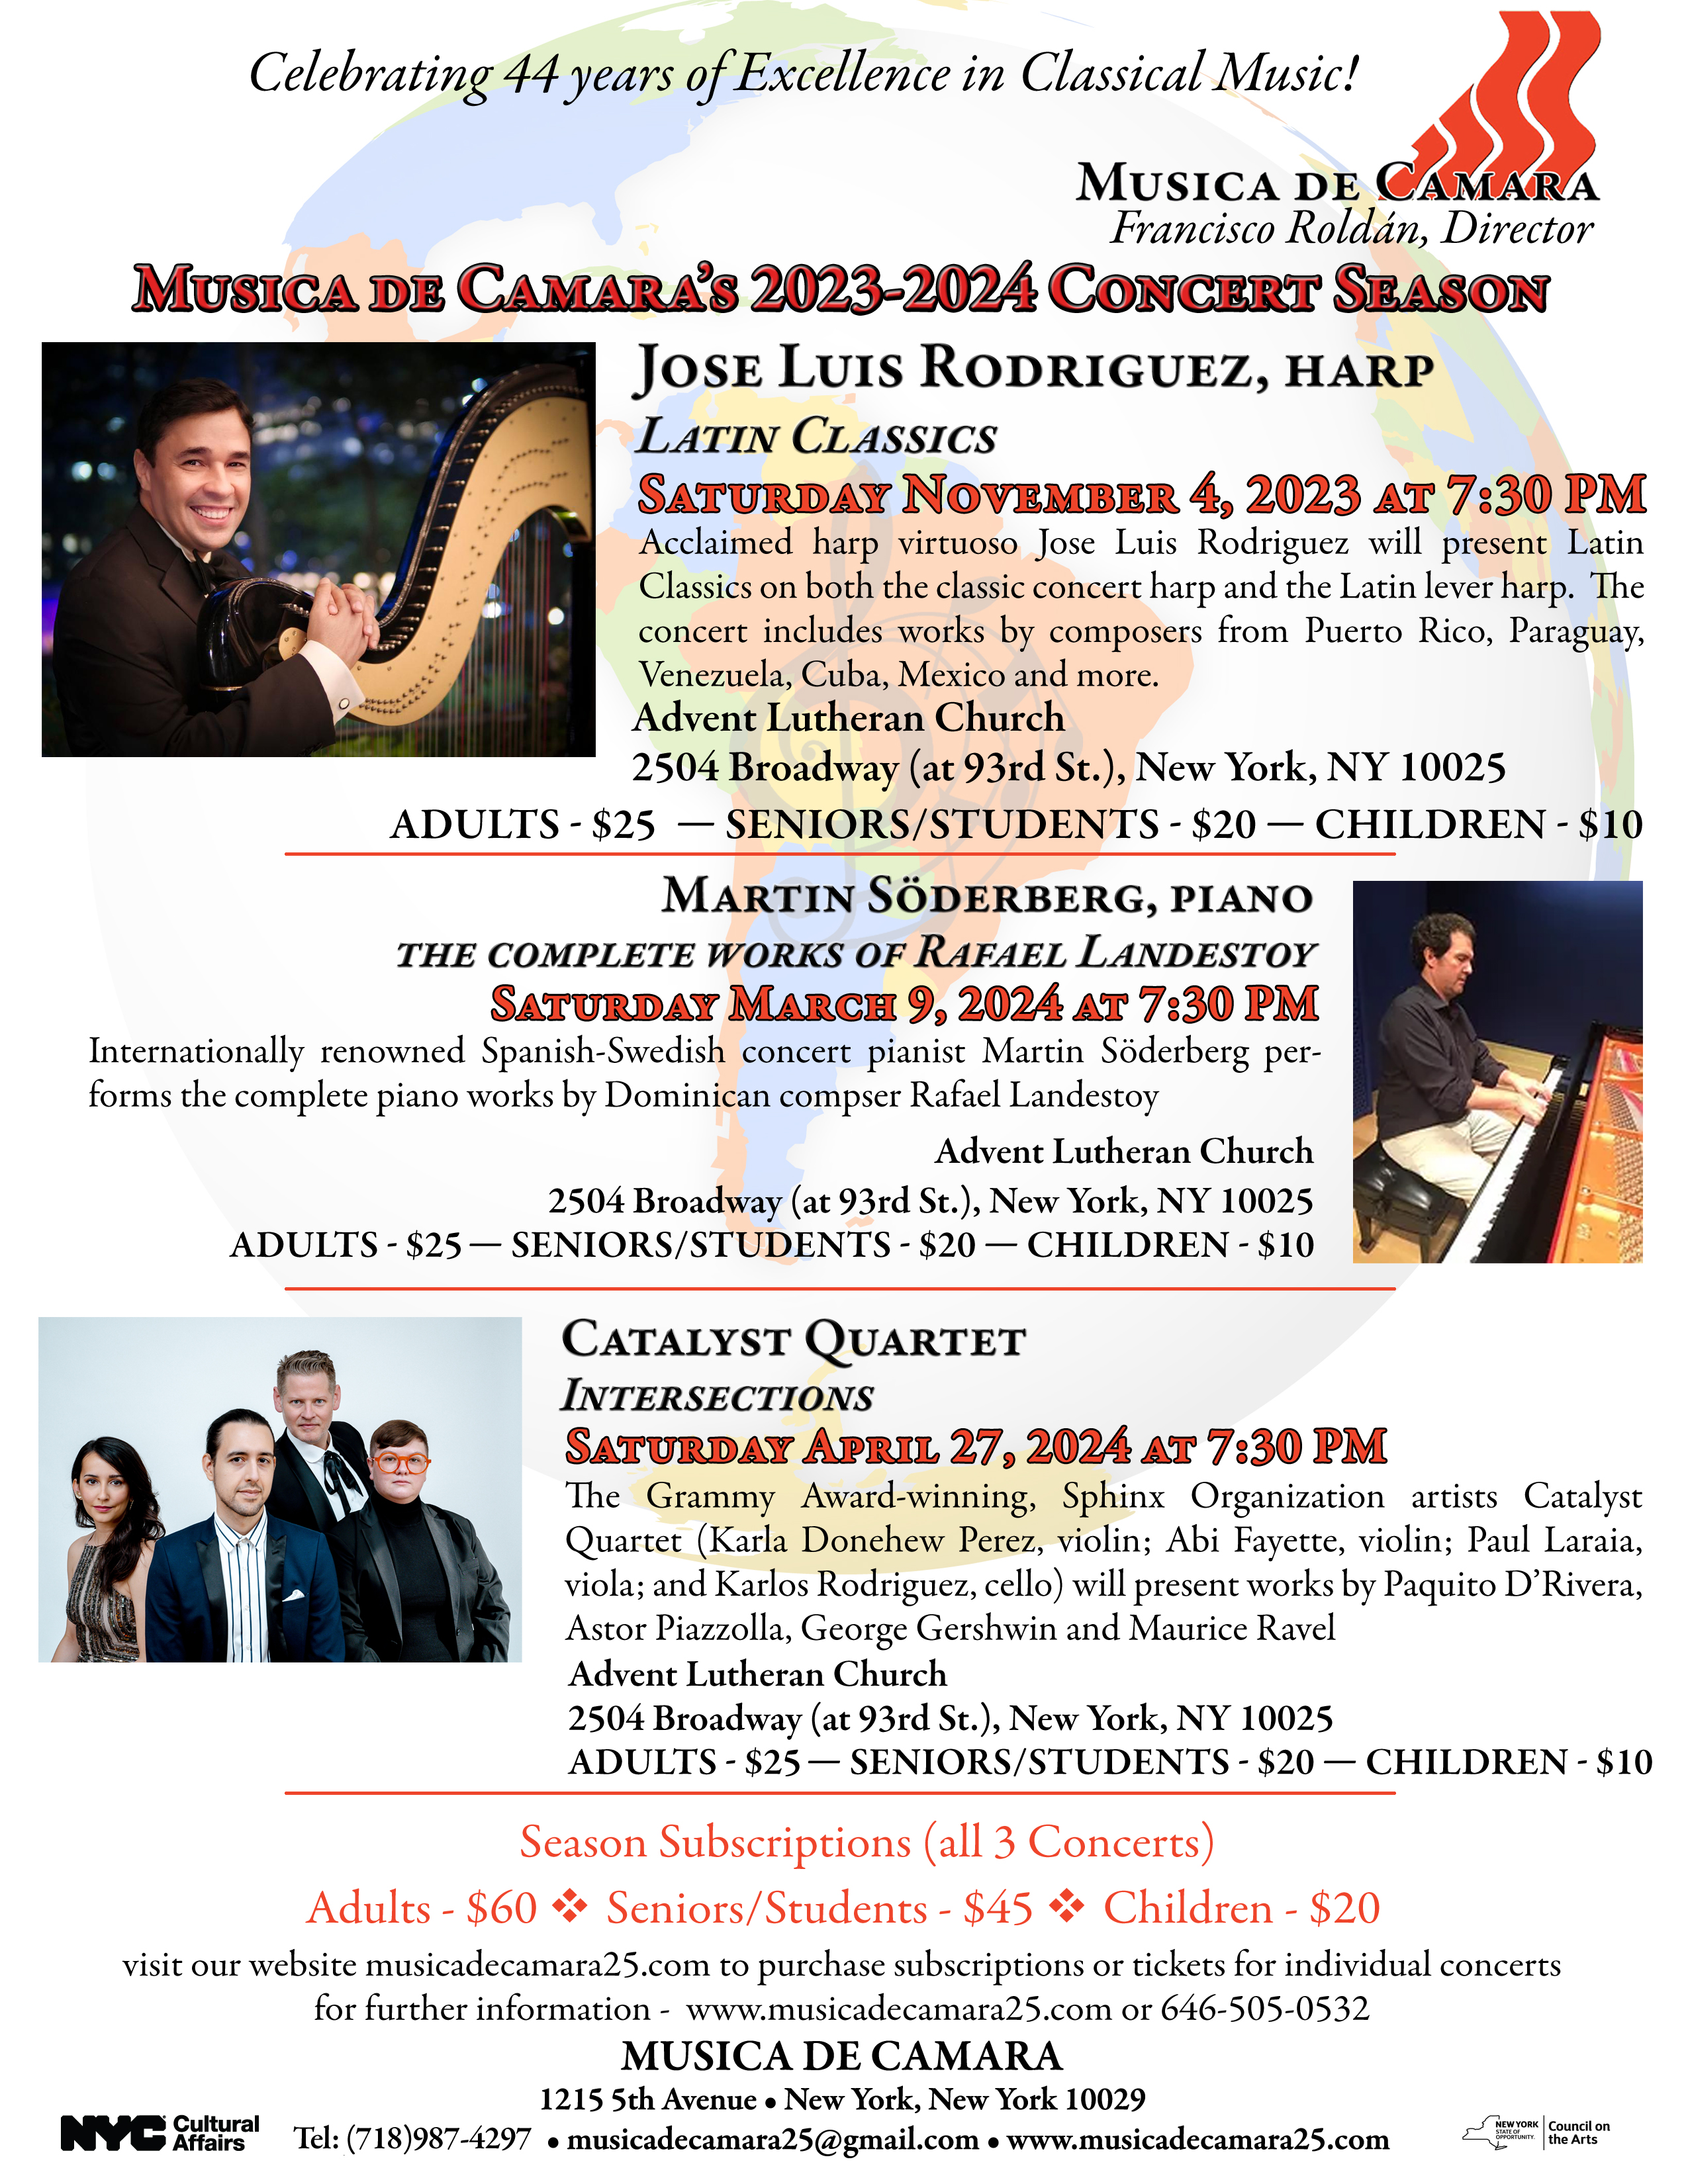 Musica de Camara 44th Anniversary Season